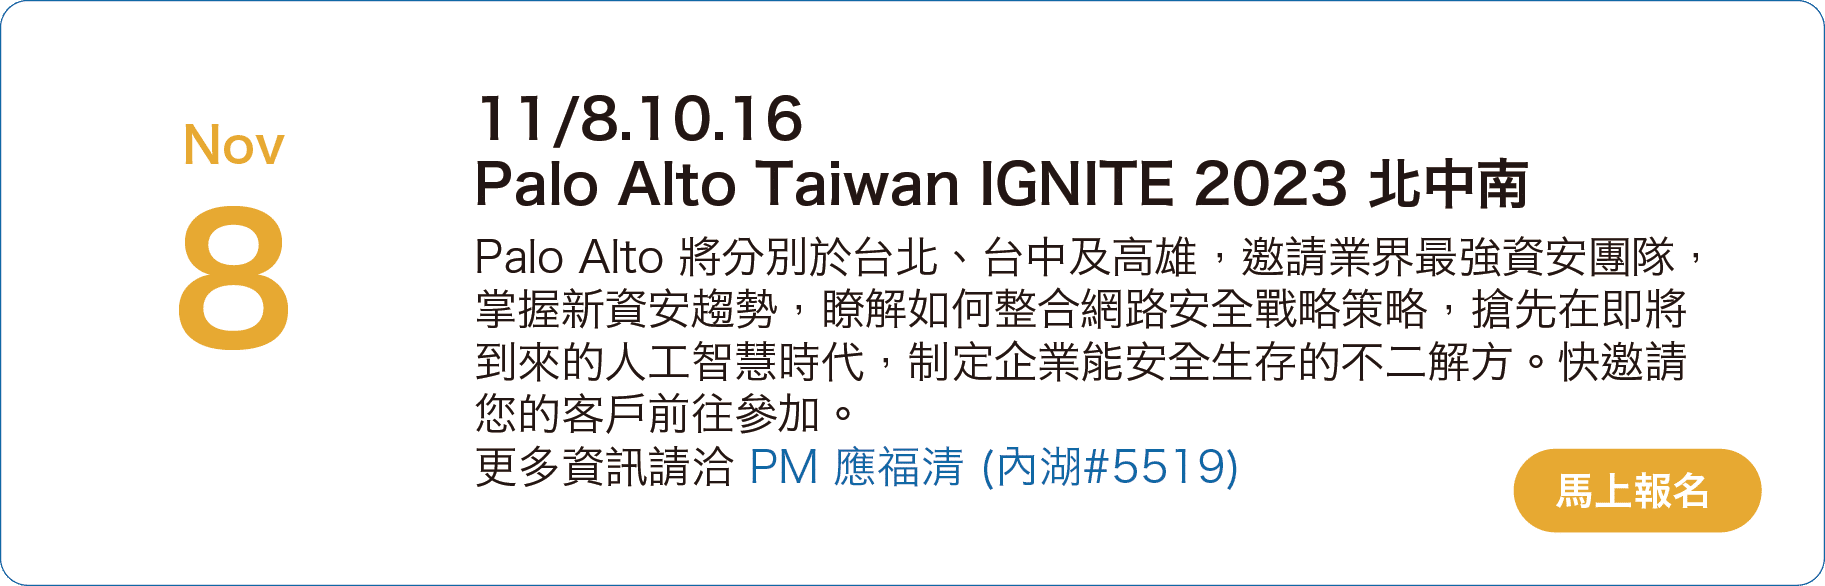 Palo Alto Taiwan IGNITE 2023 北中南